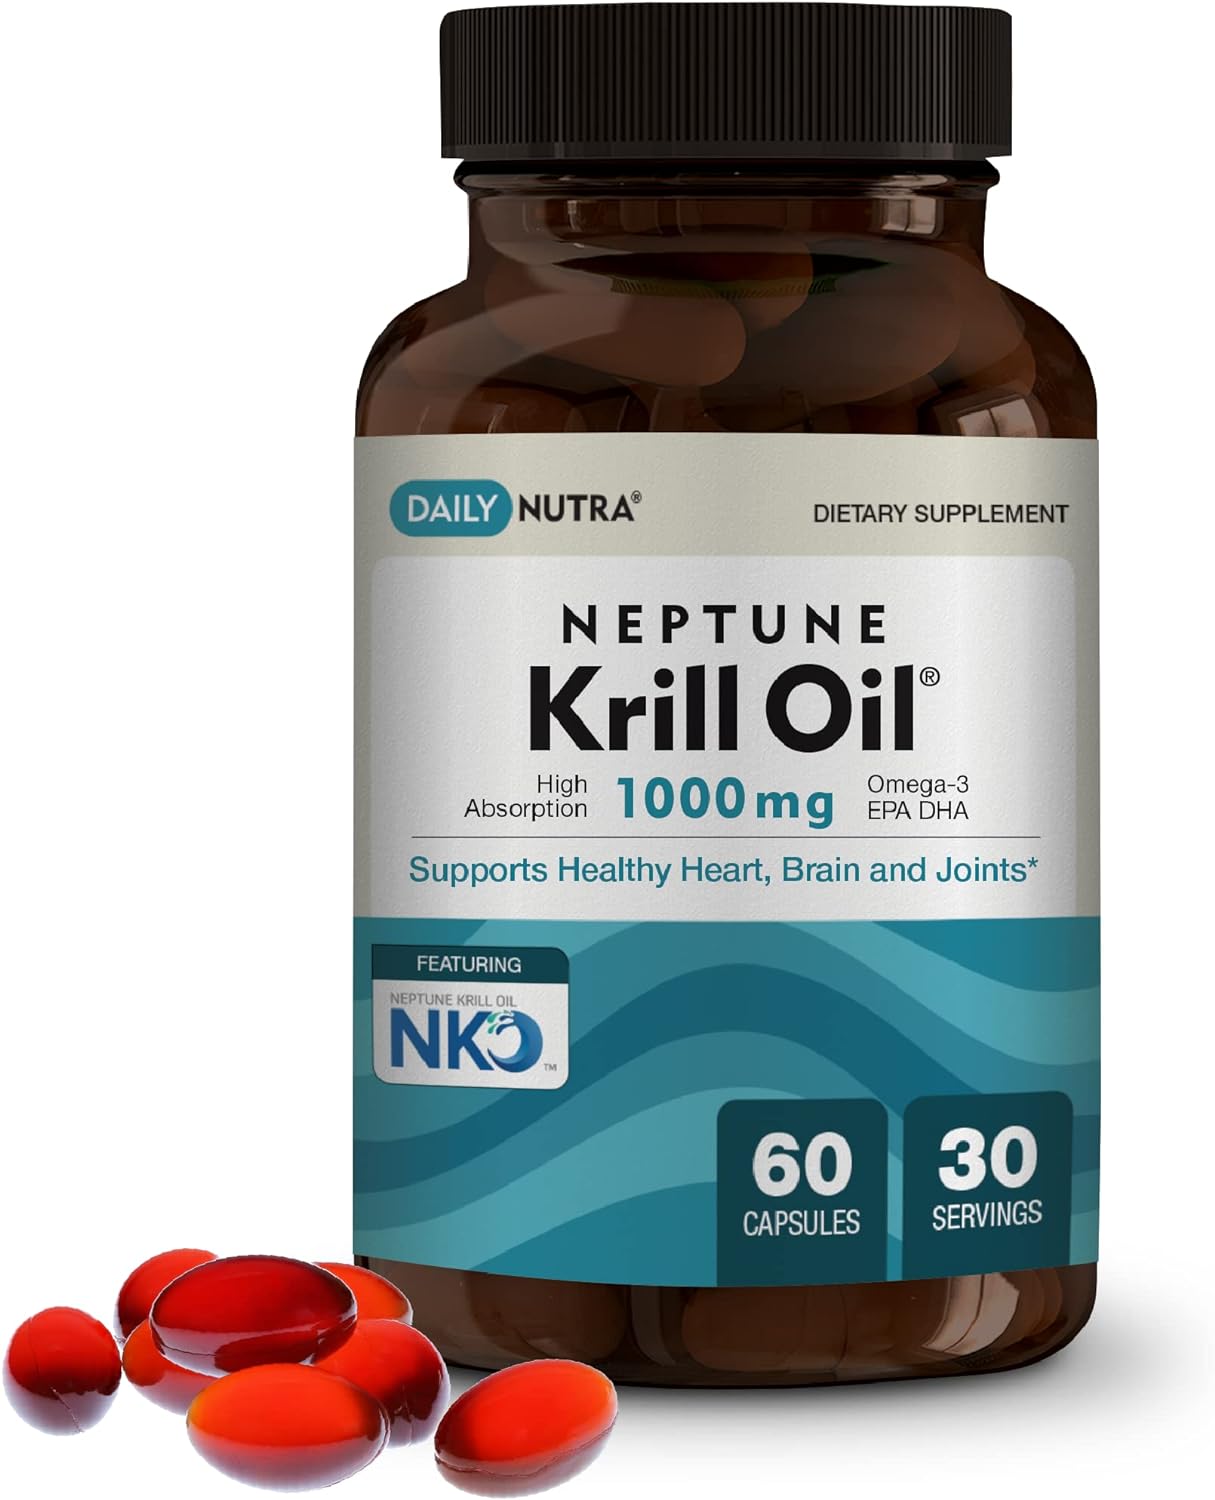 DailyNutra Neptune Krill Oil 1000mg - Antarctic Krill Oil Omega-3 Phospholipids, EPA, DHA & Astaxanthin - Promotes Healt